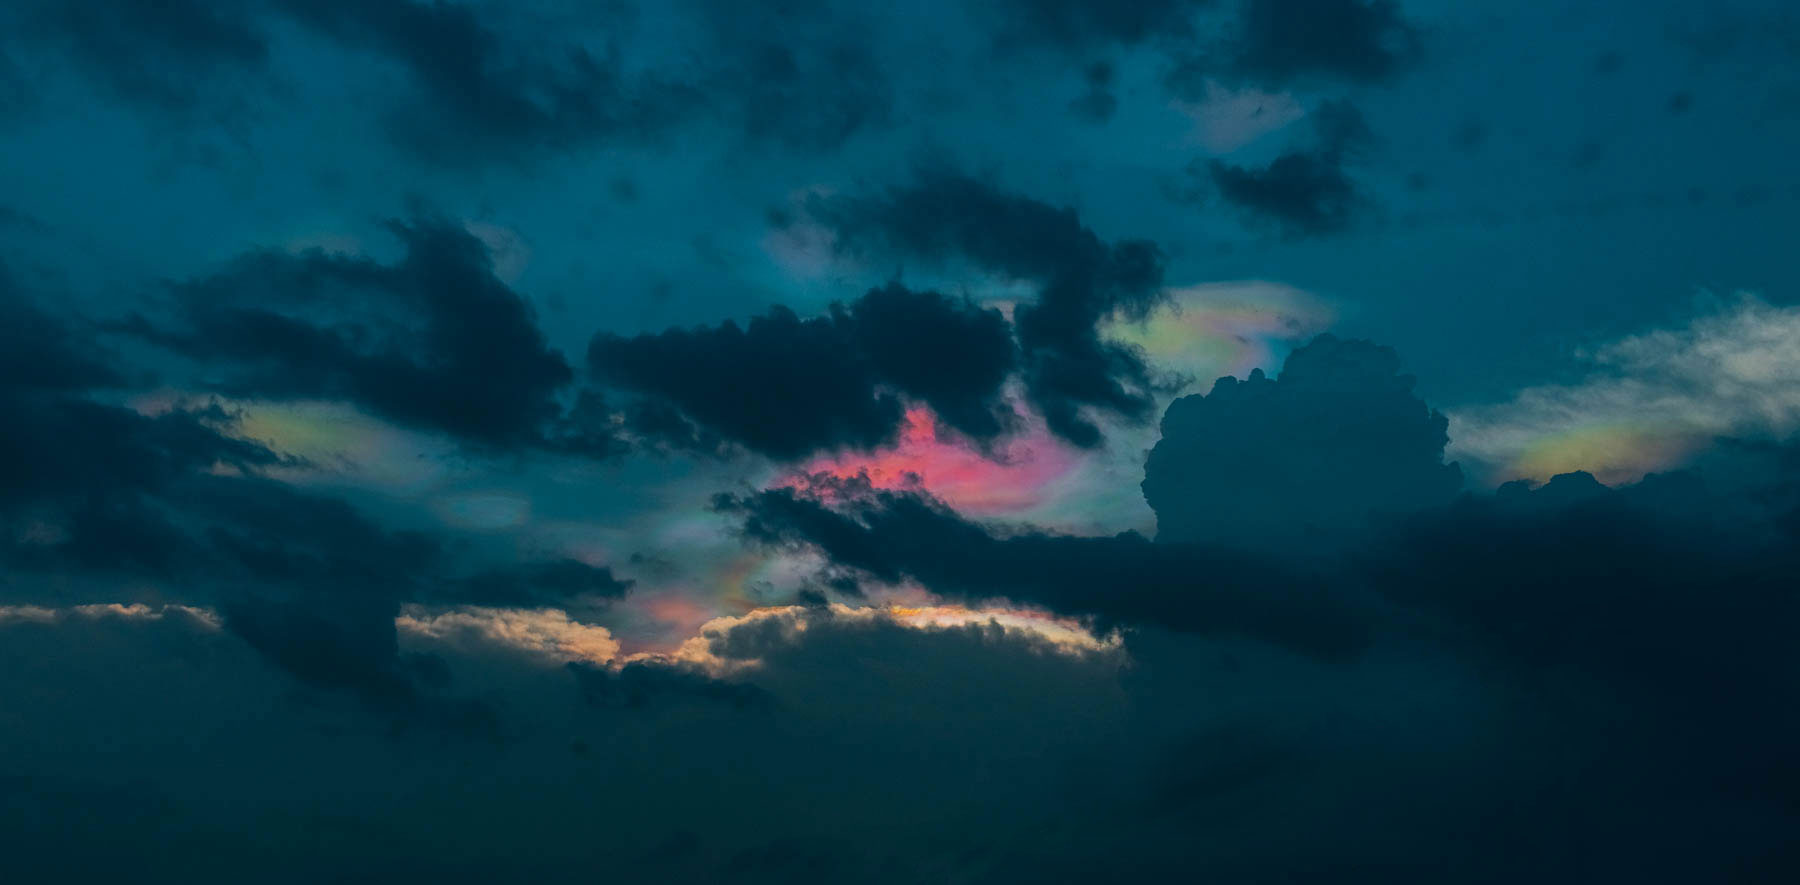 cloud iridescence, iridescent cloud, rainbow cloud, diffractive cloud, sunset, jaisalmer, rajasthan, india, sky phenomenon, rain, monsoon, thunderstorm, eyesfordestinations, eyesforrajasthan, travel photographer, travel blogger, naina redhu, naina.co